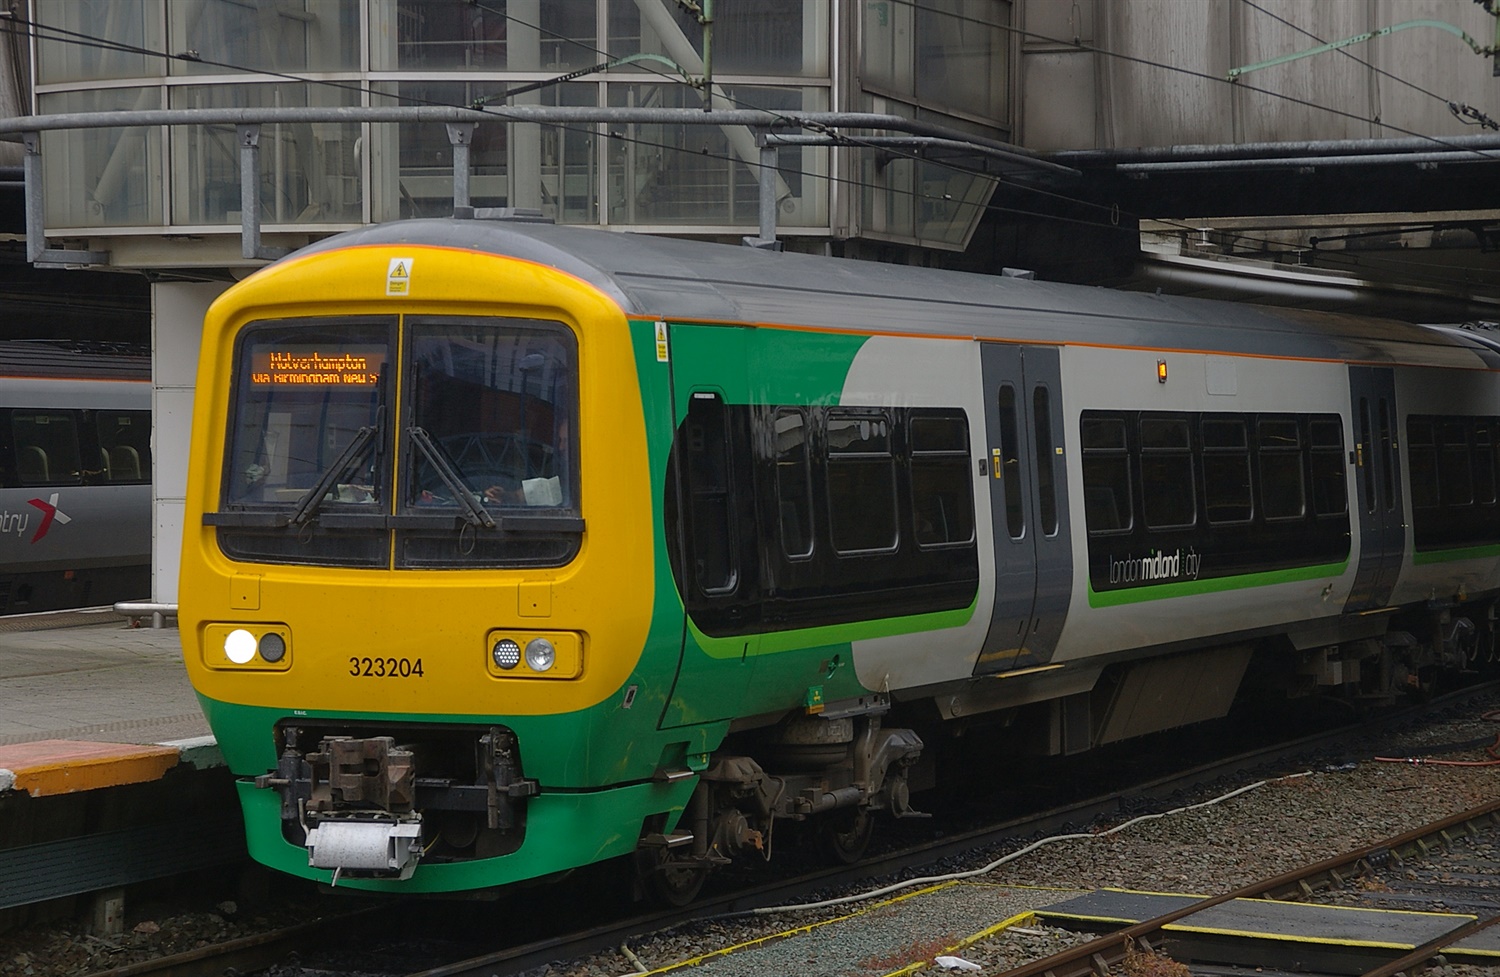 West Midlands Rail set to enter DfT partnership agreement